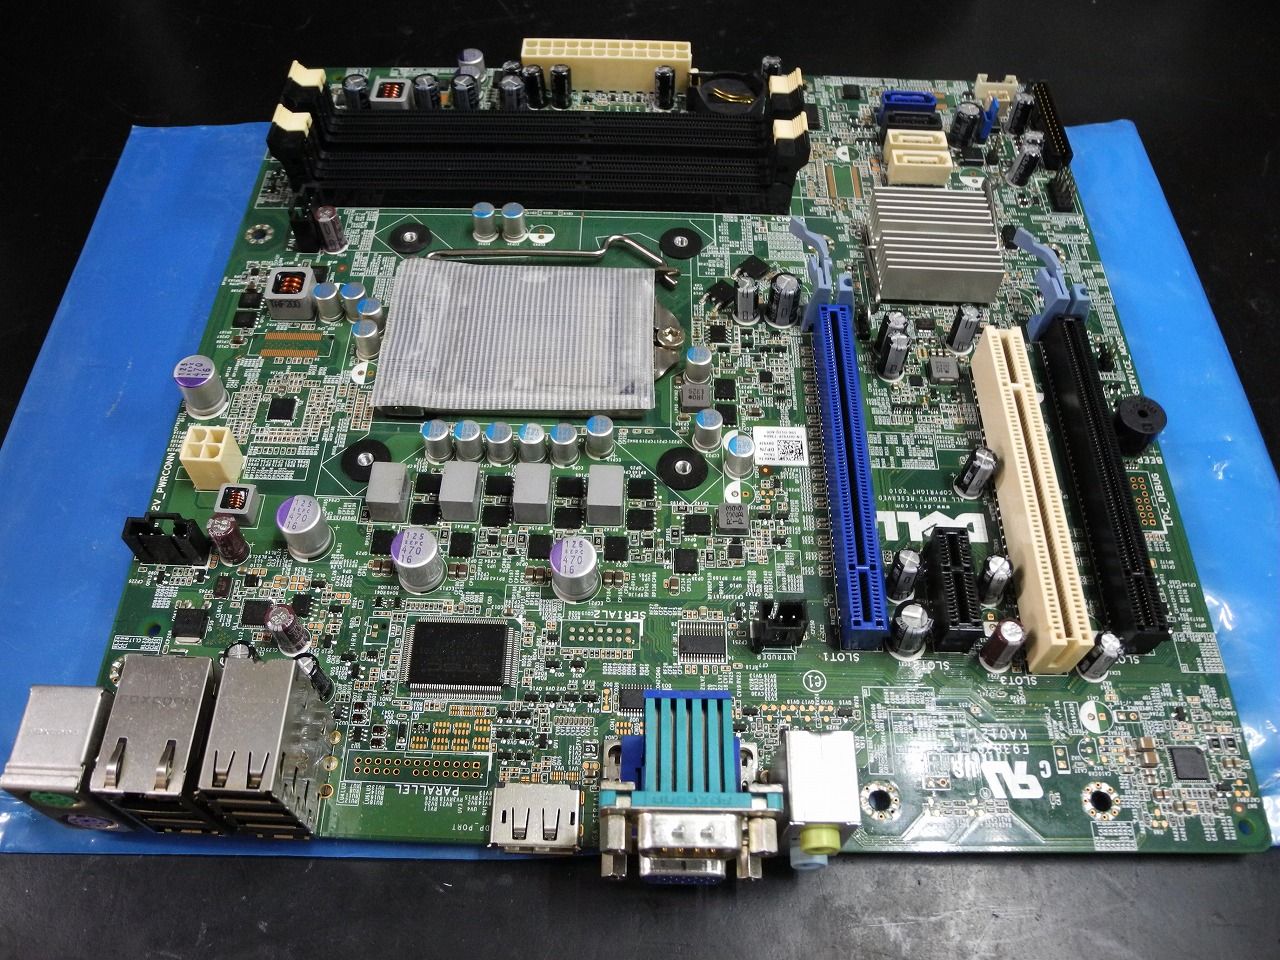 Dell Optiplex７９０ マザーボード交換修理 湘南のパソコン修理専門店 下田商会 0466 48 2386